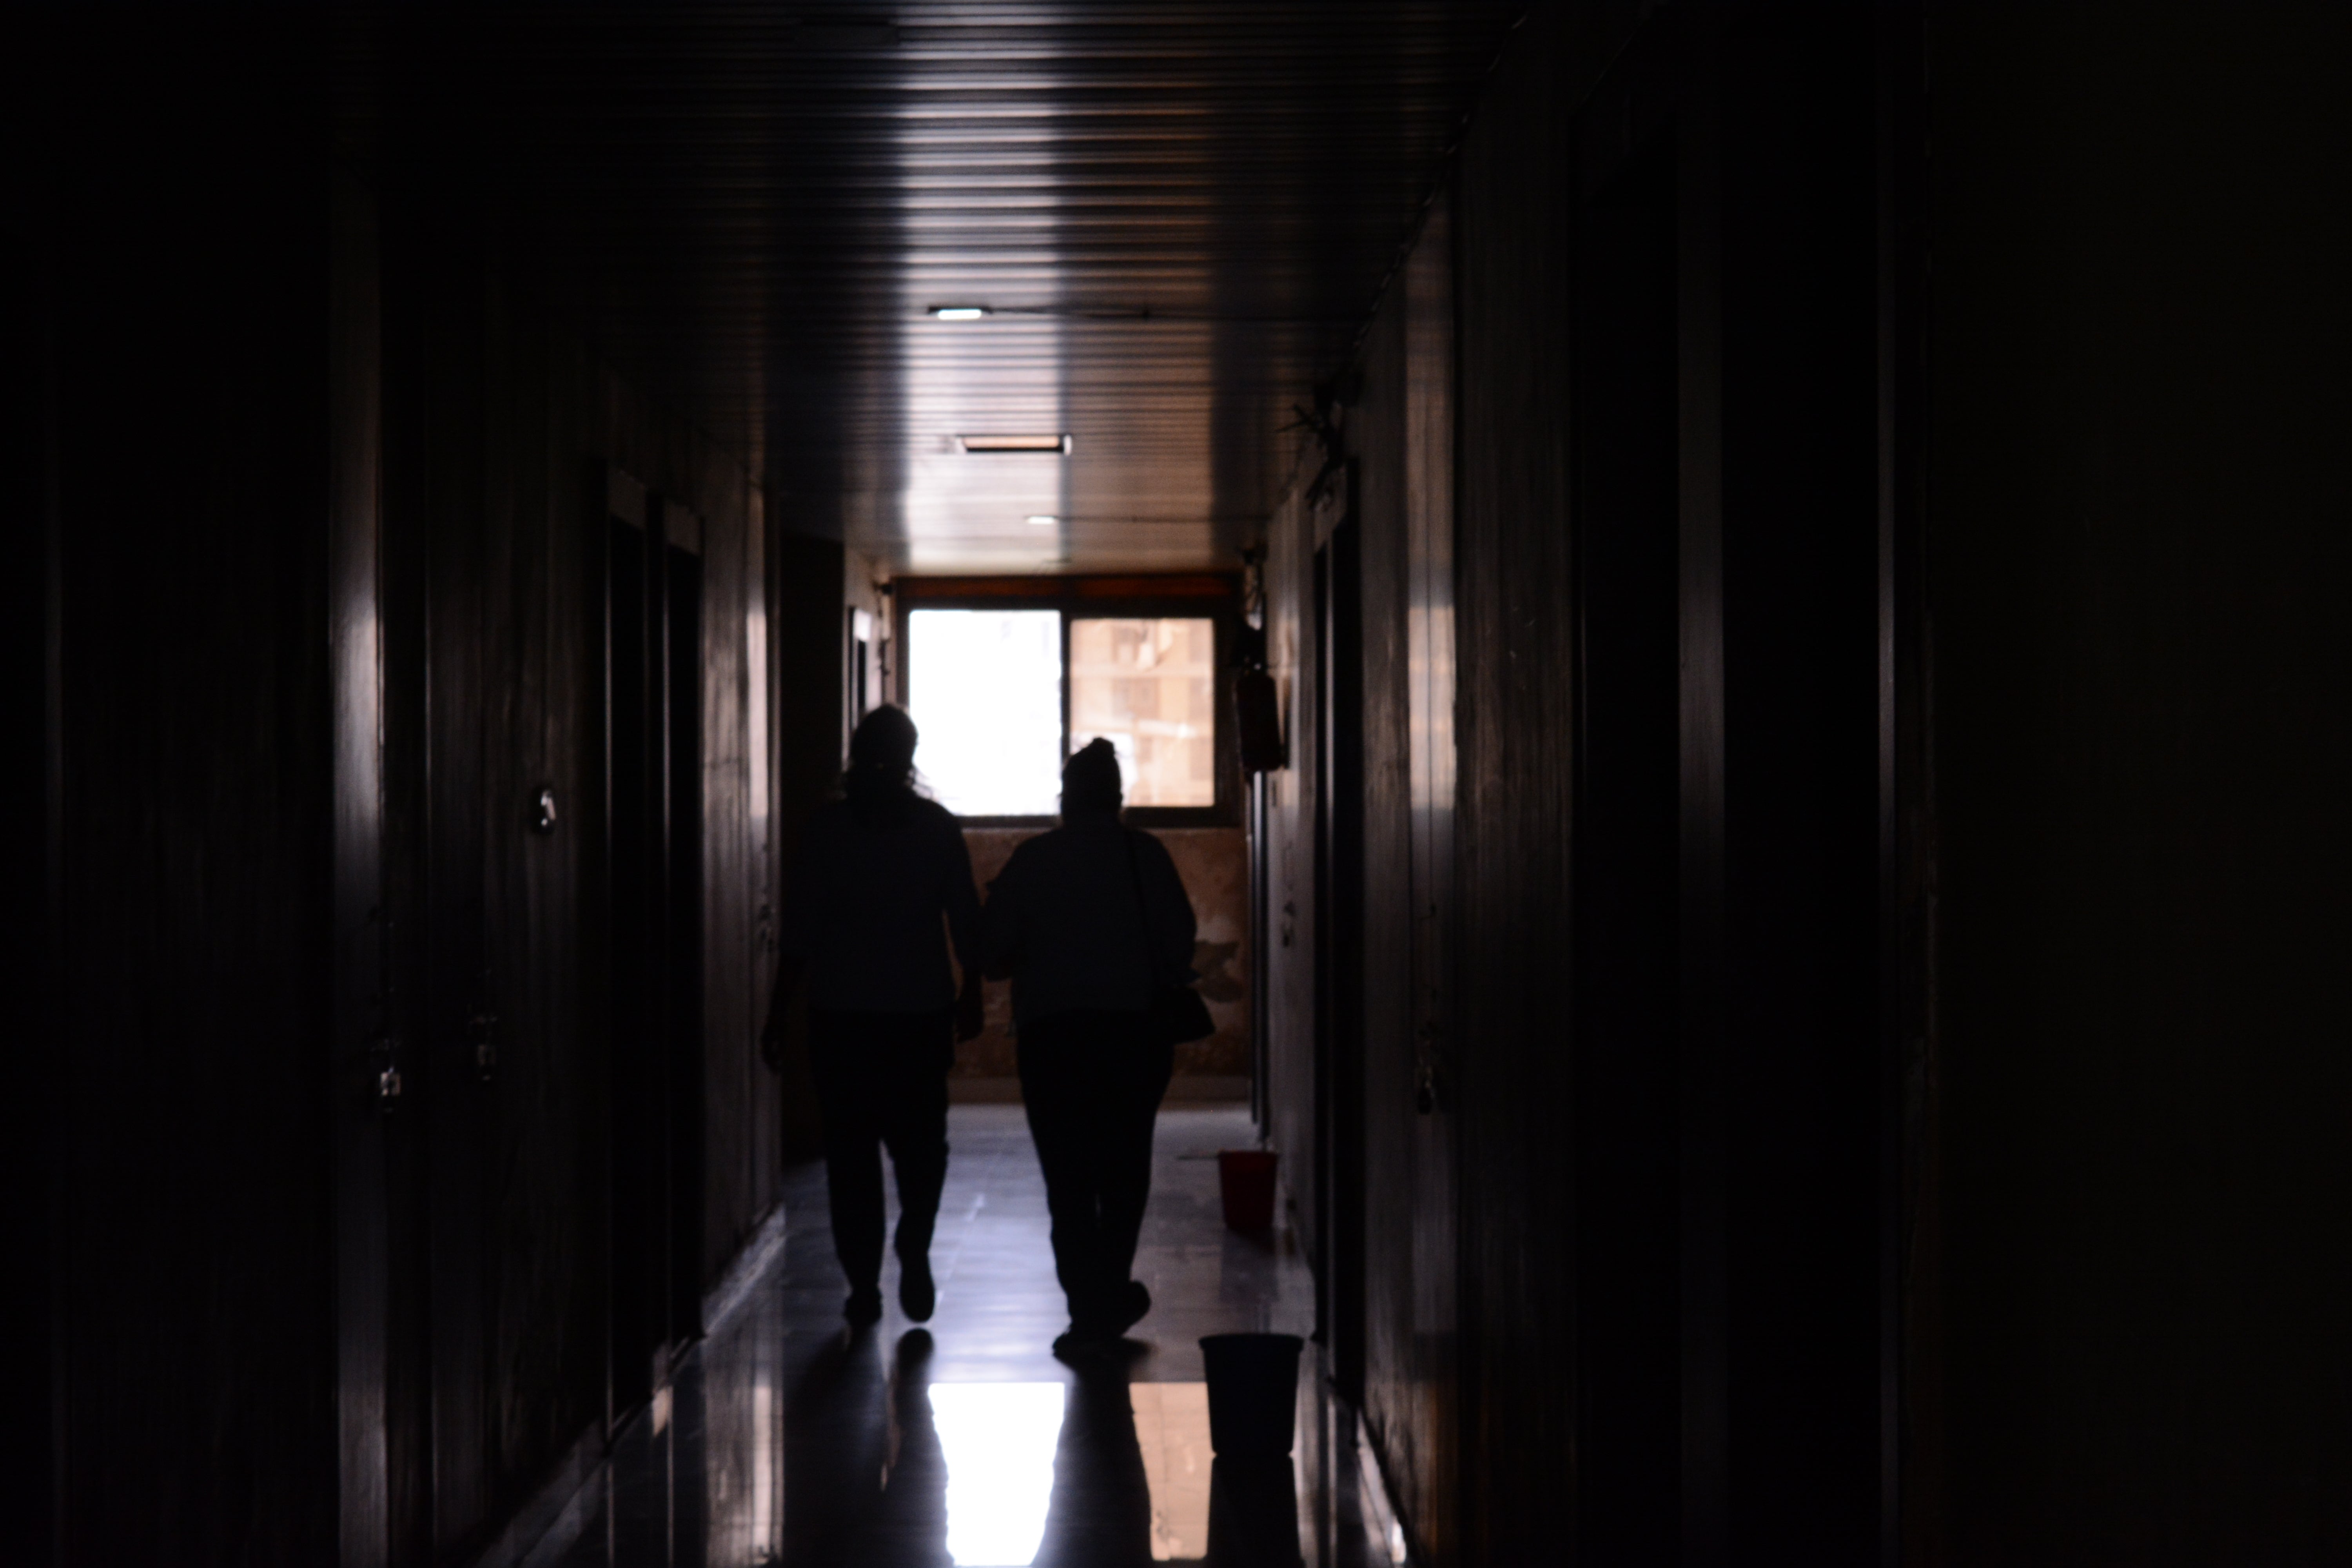 Students walking in the hostel corridors